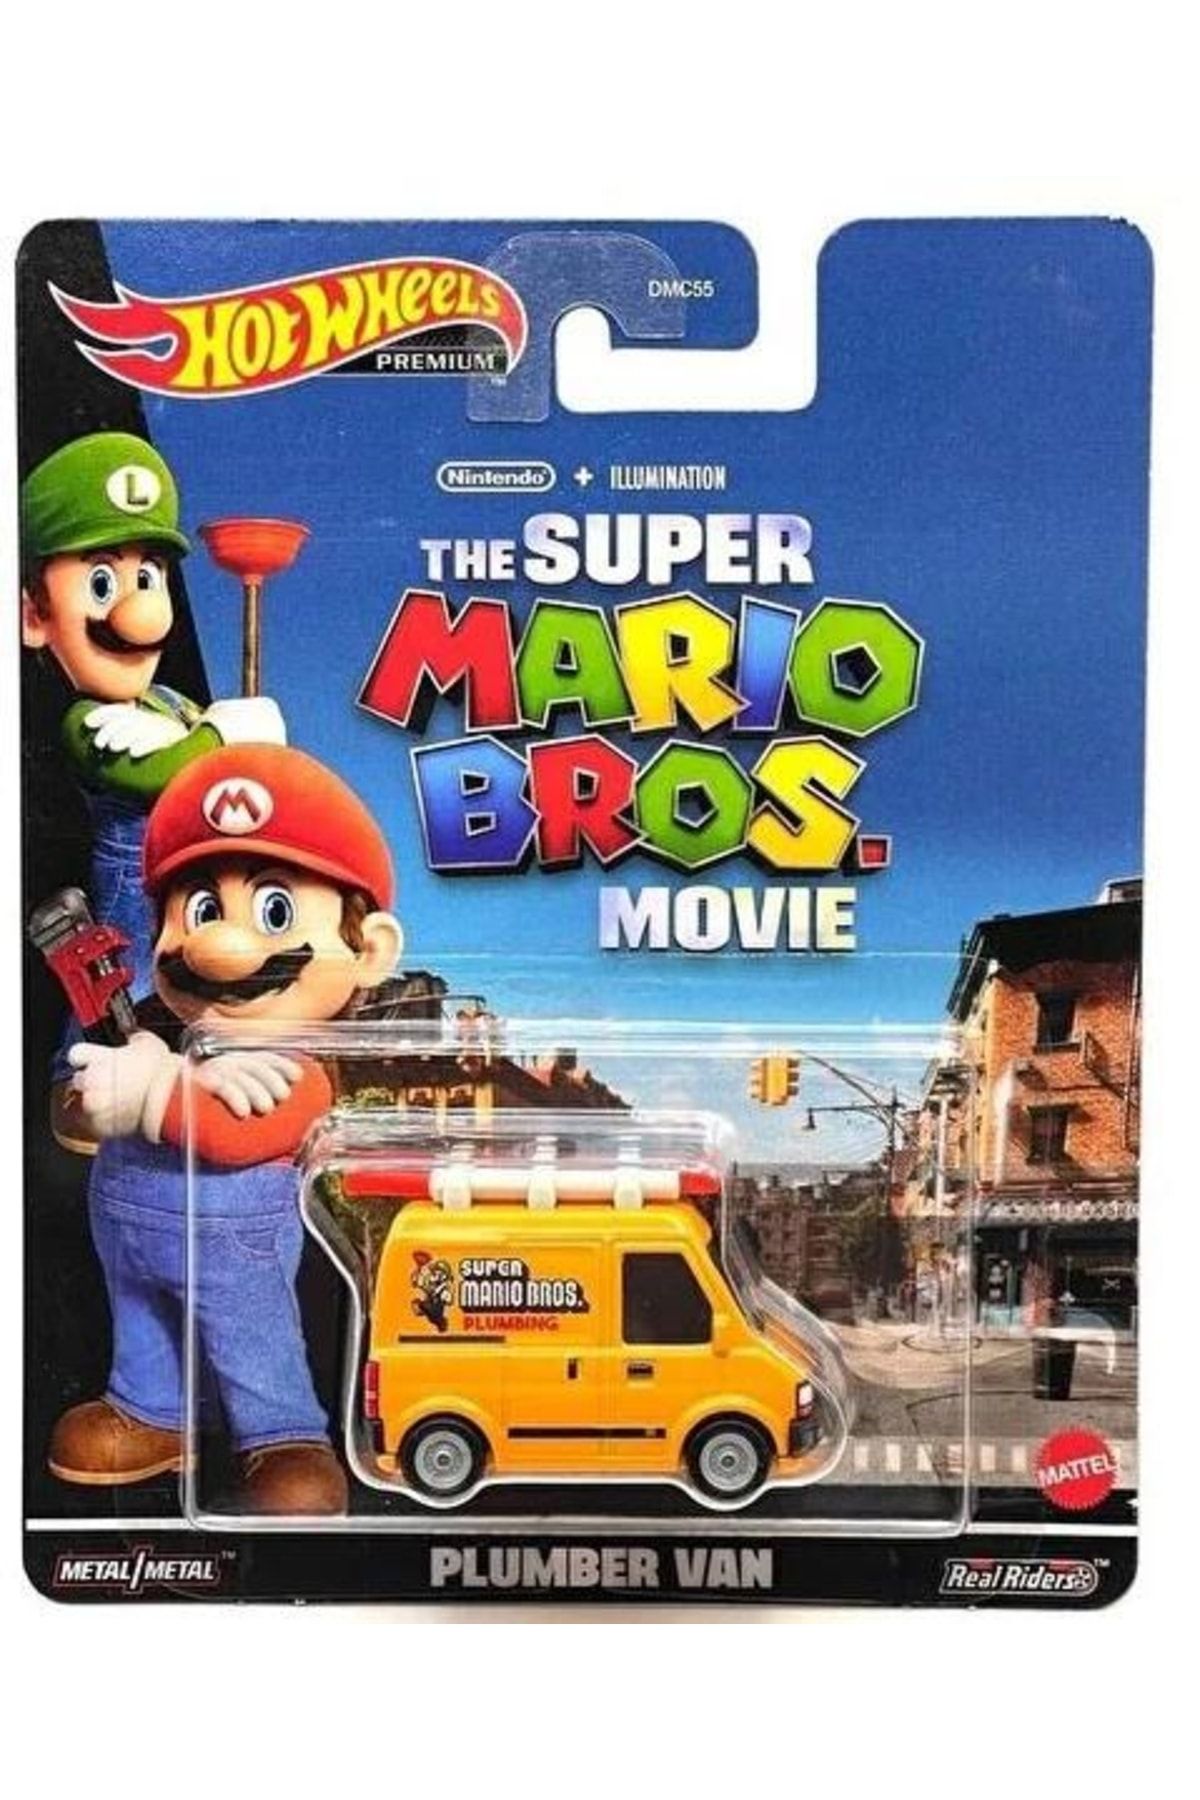 Hot Wheels Premium The Super Mario Bros Movie Plumber Van Hkc19 Fiyatı Yorumları Trendyol 1198